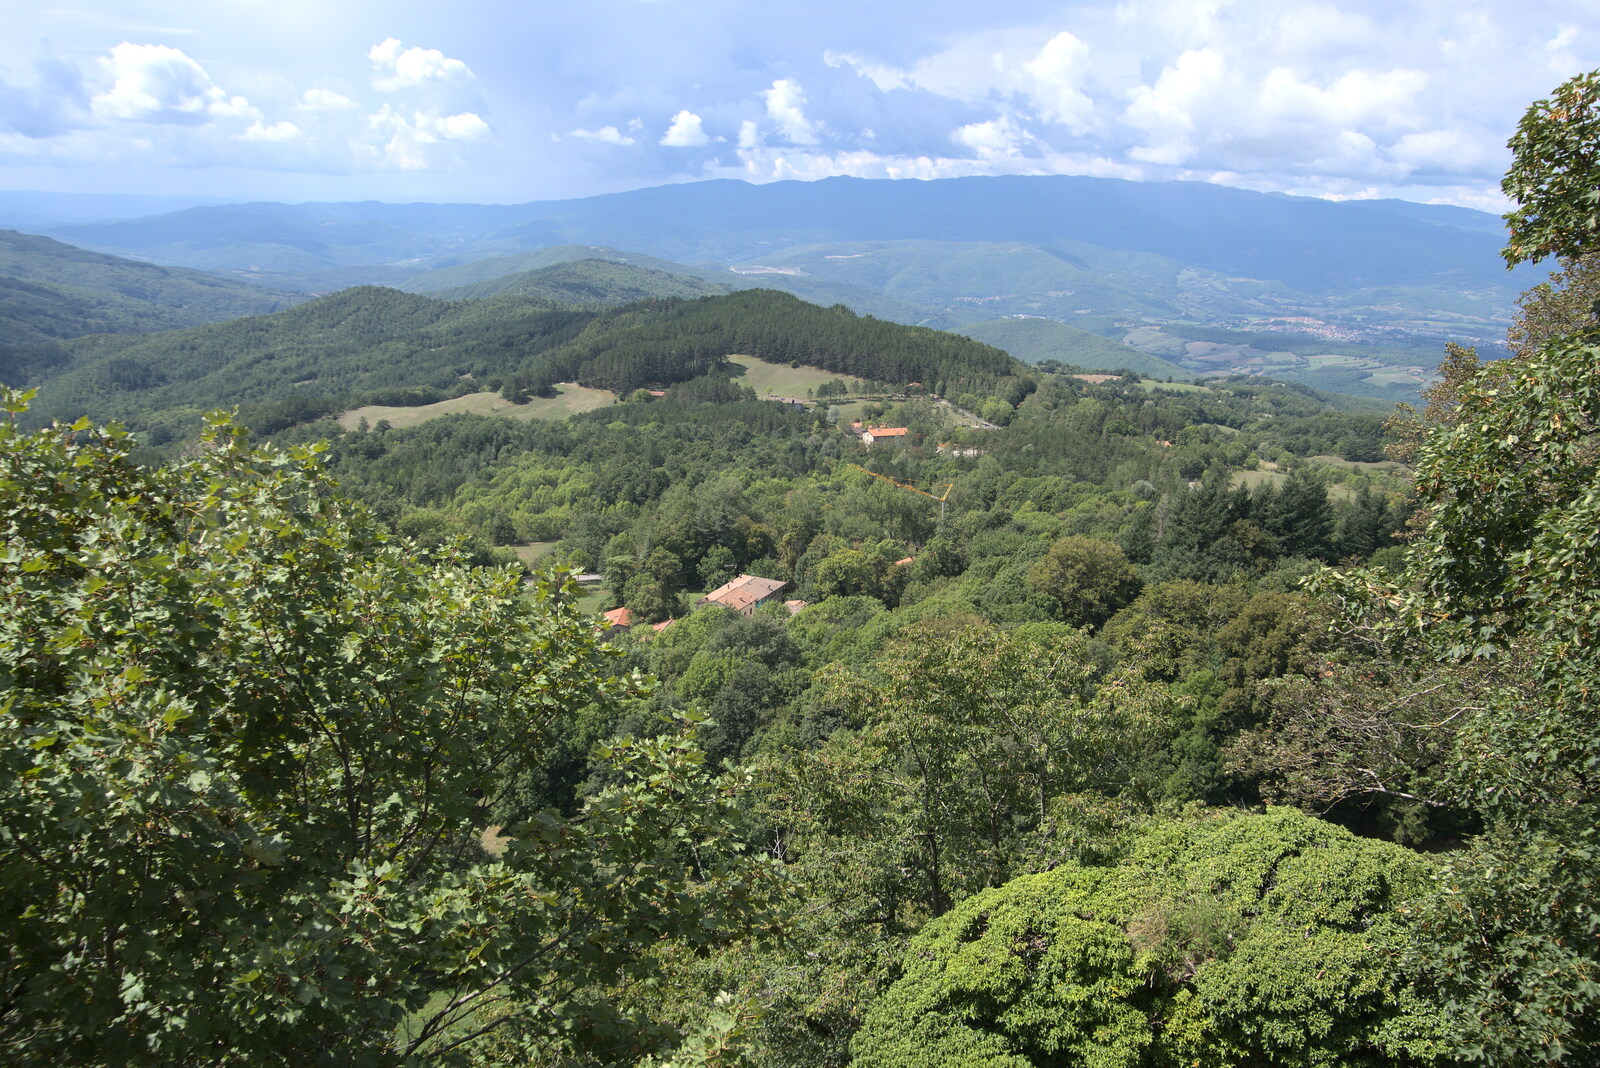 Castiglio Del Lago and Santuario della Verna, Umbria and Tuscany, Italy - 1st September 2022: The view from the monastery